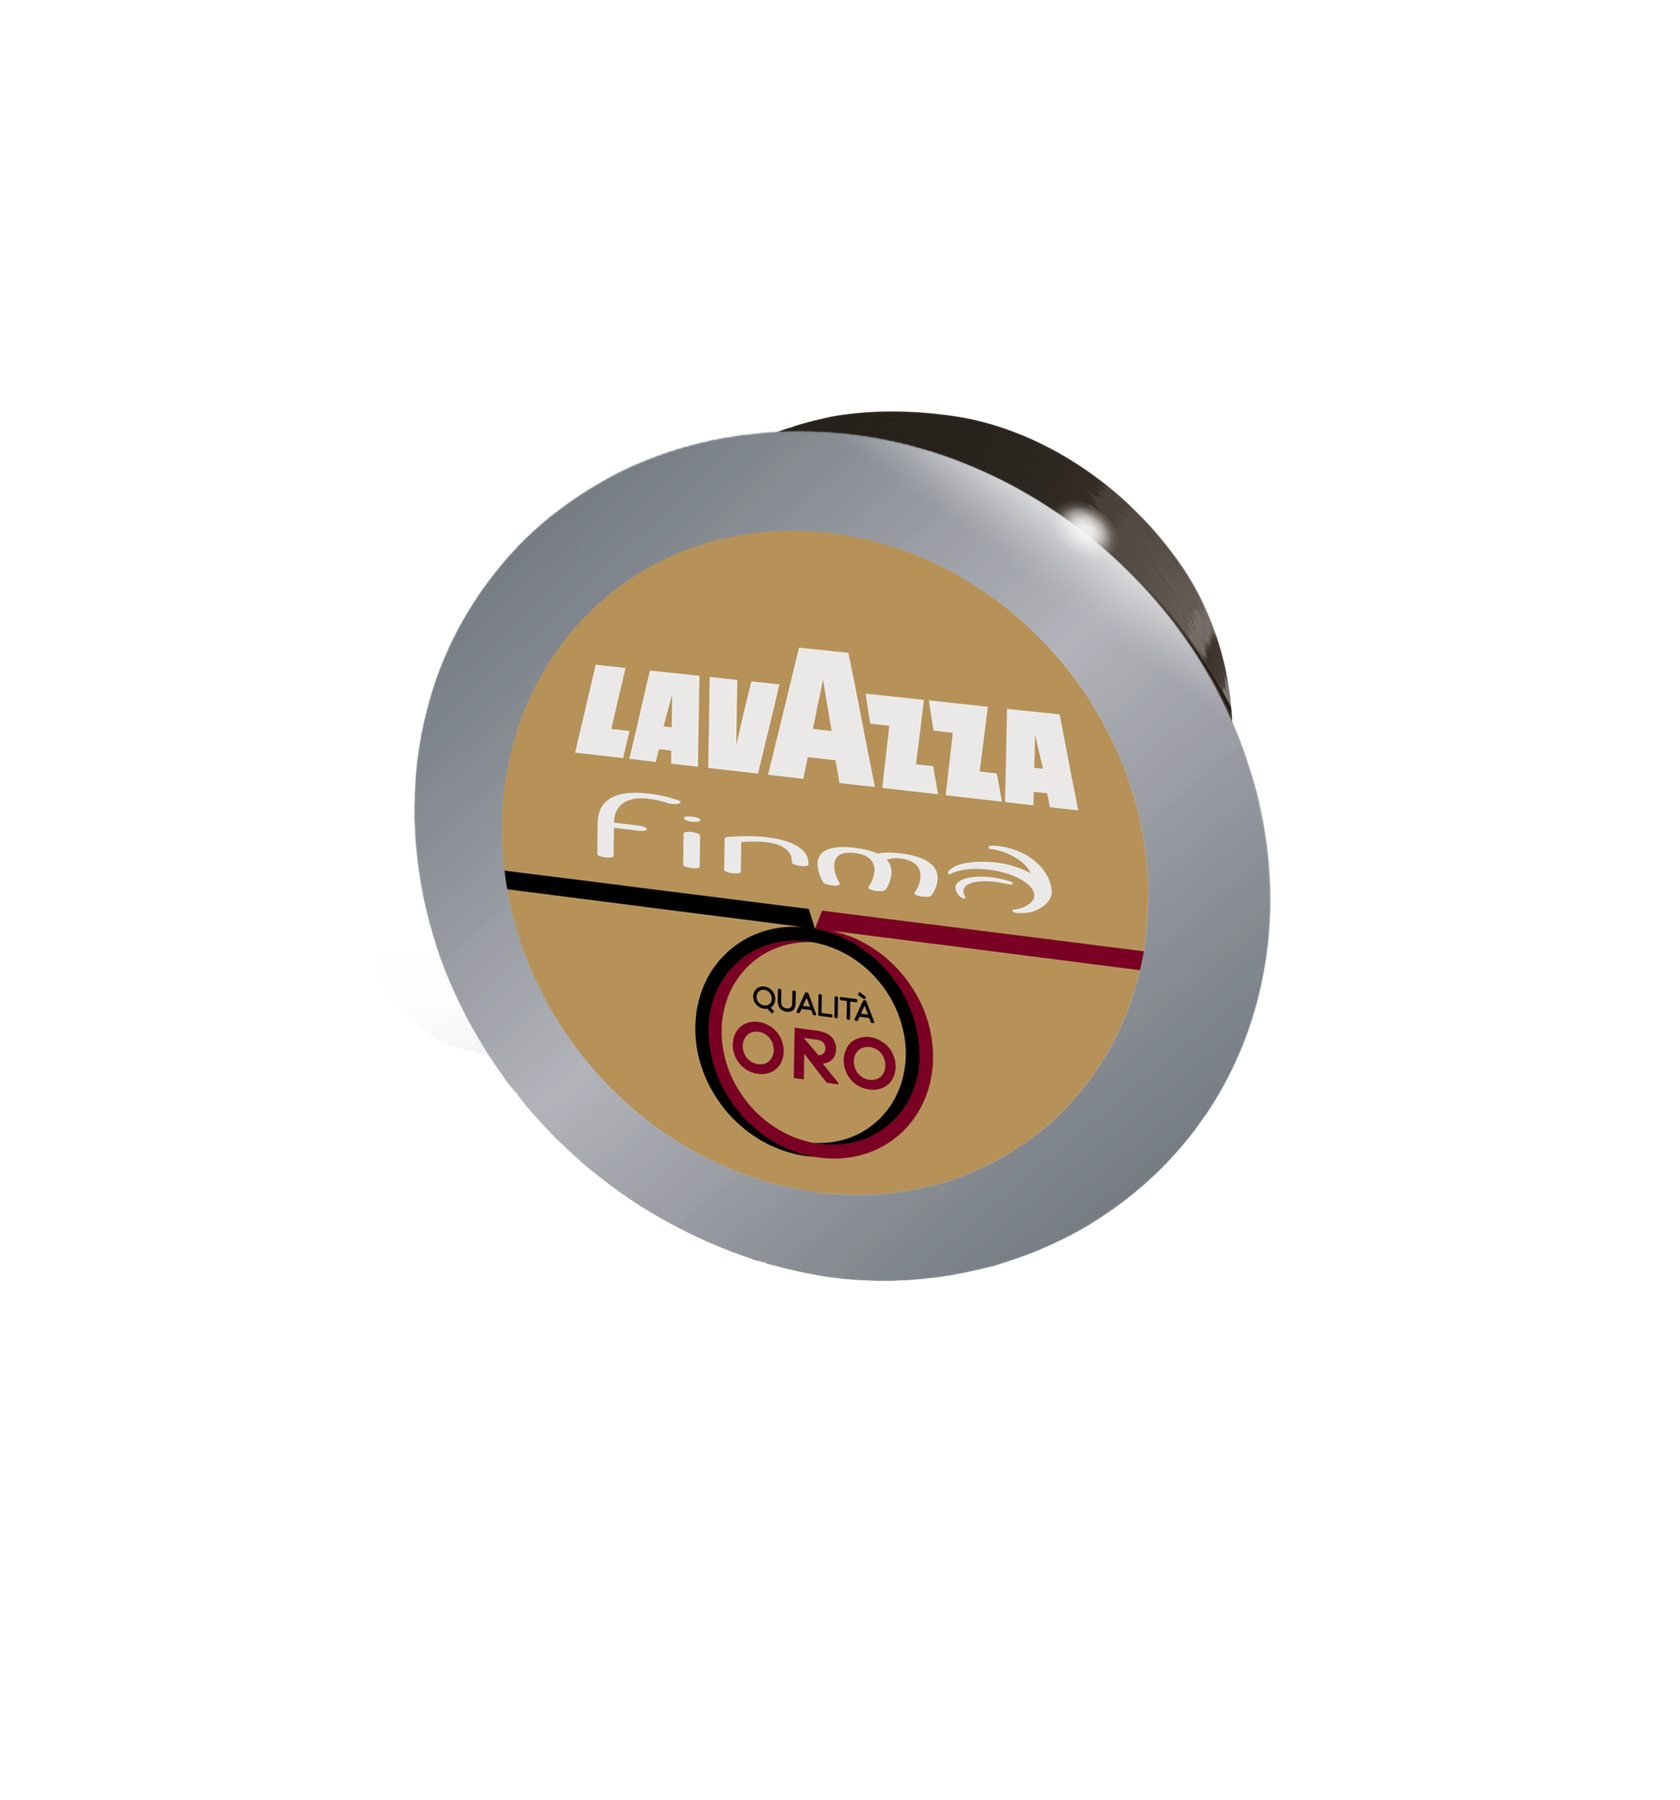 Lavazza firma. Кофе в капсулах Lavazza Oro. Капсулы для Лавацца firma. Лавацца Квалита.